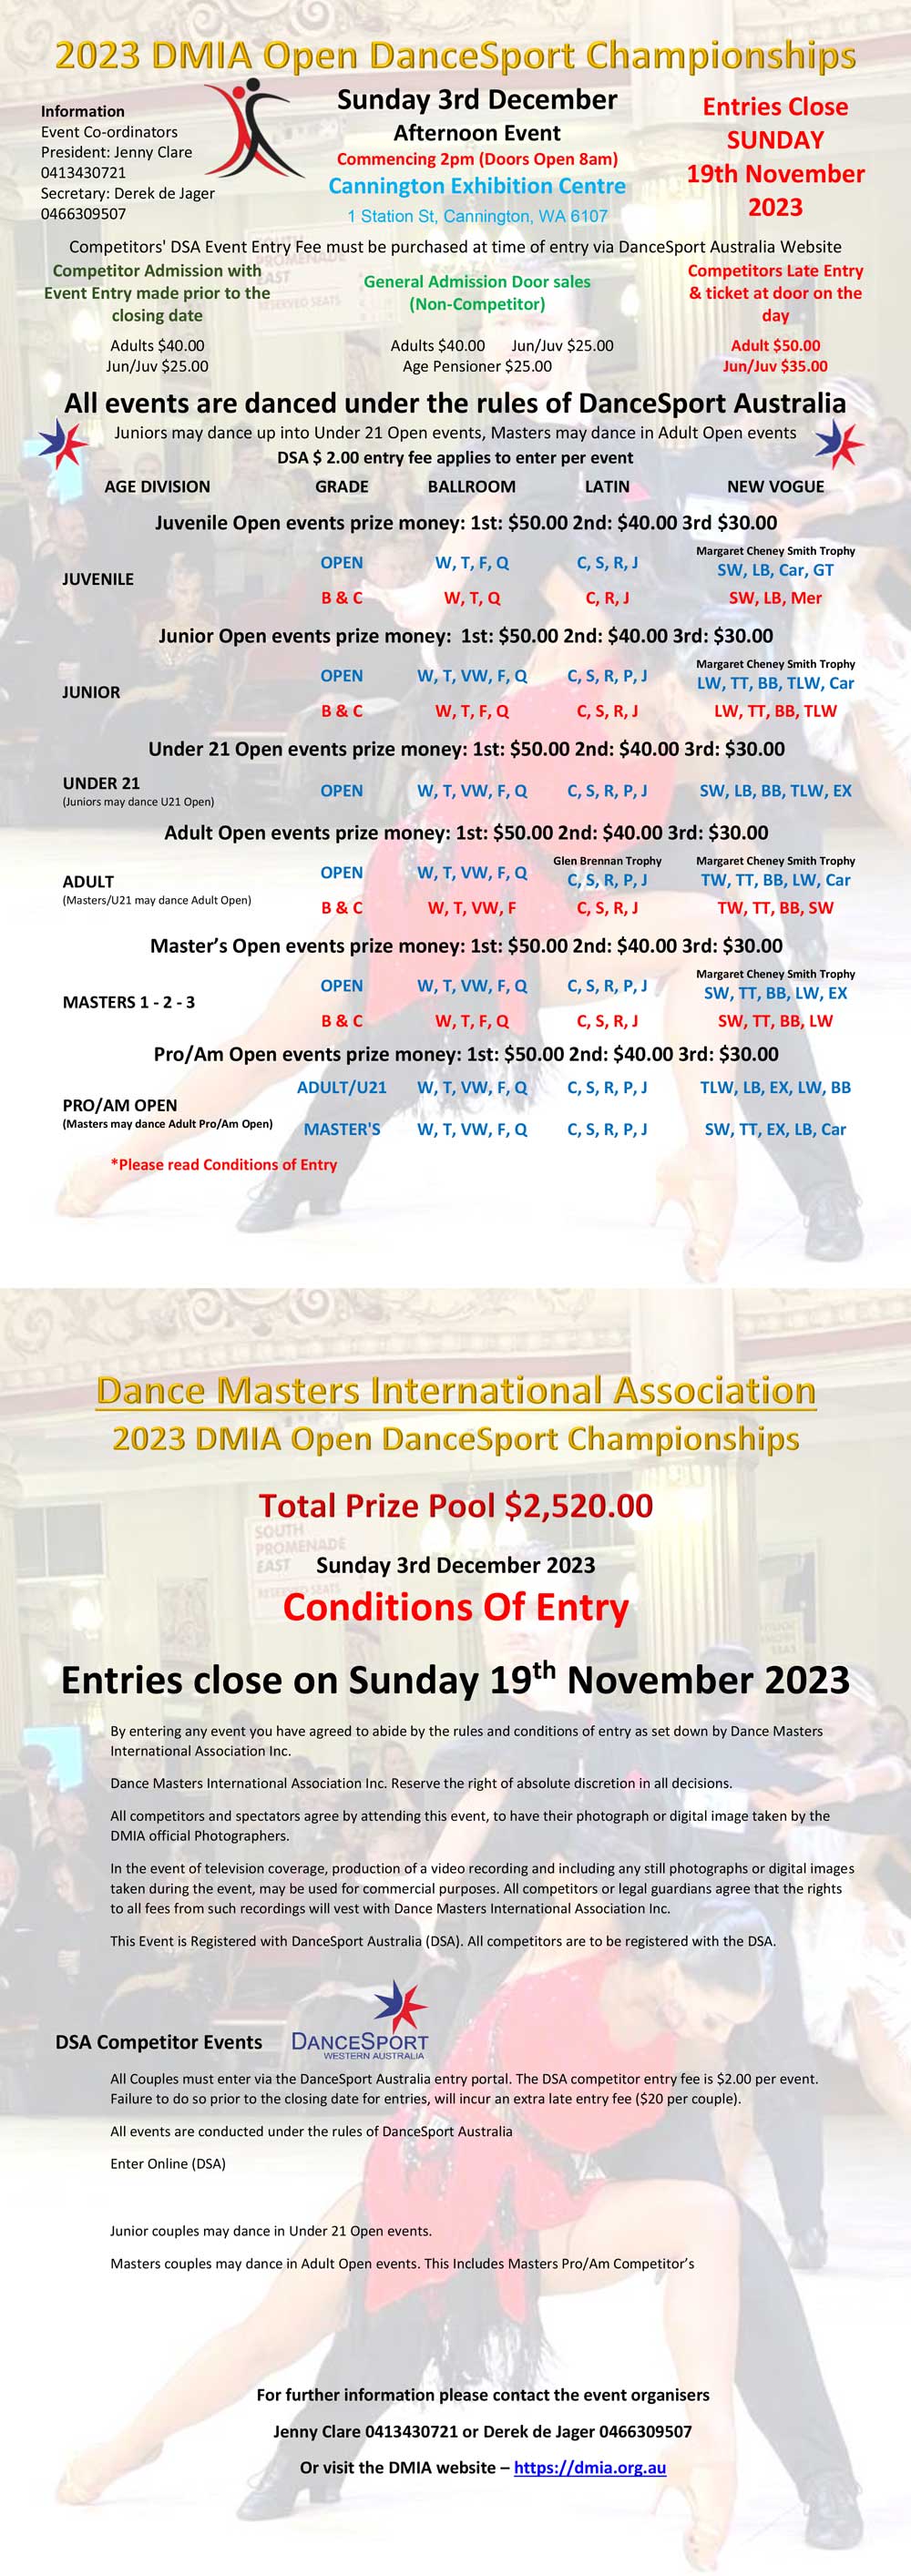 2023 DMIA Open DanceSport Championship Syllabus and Information